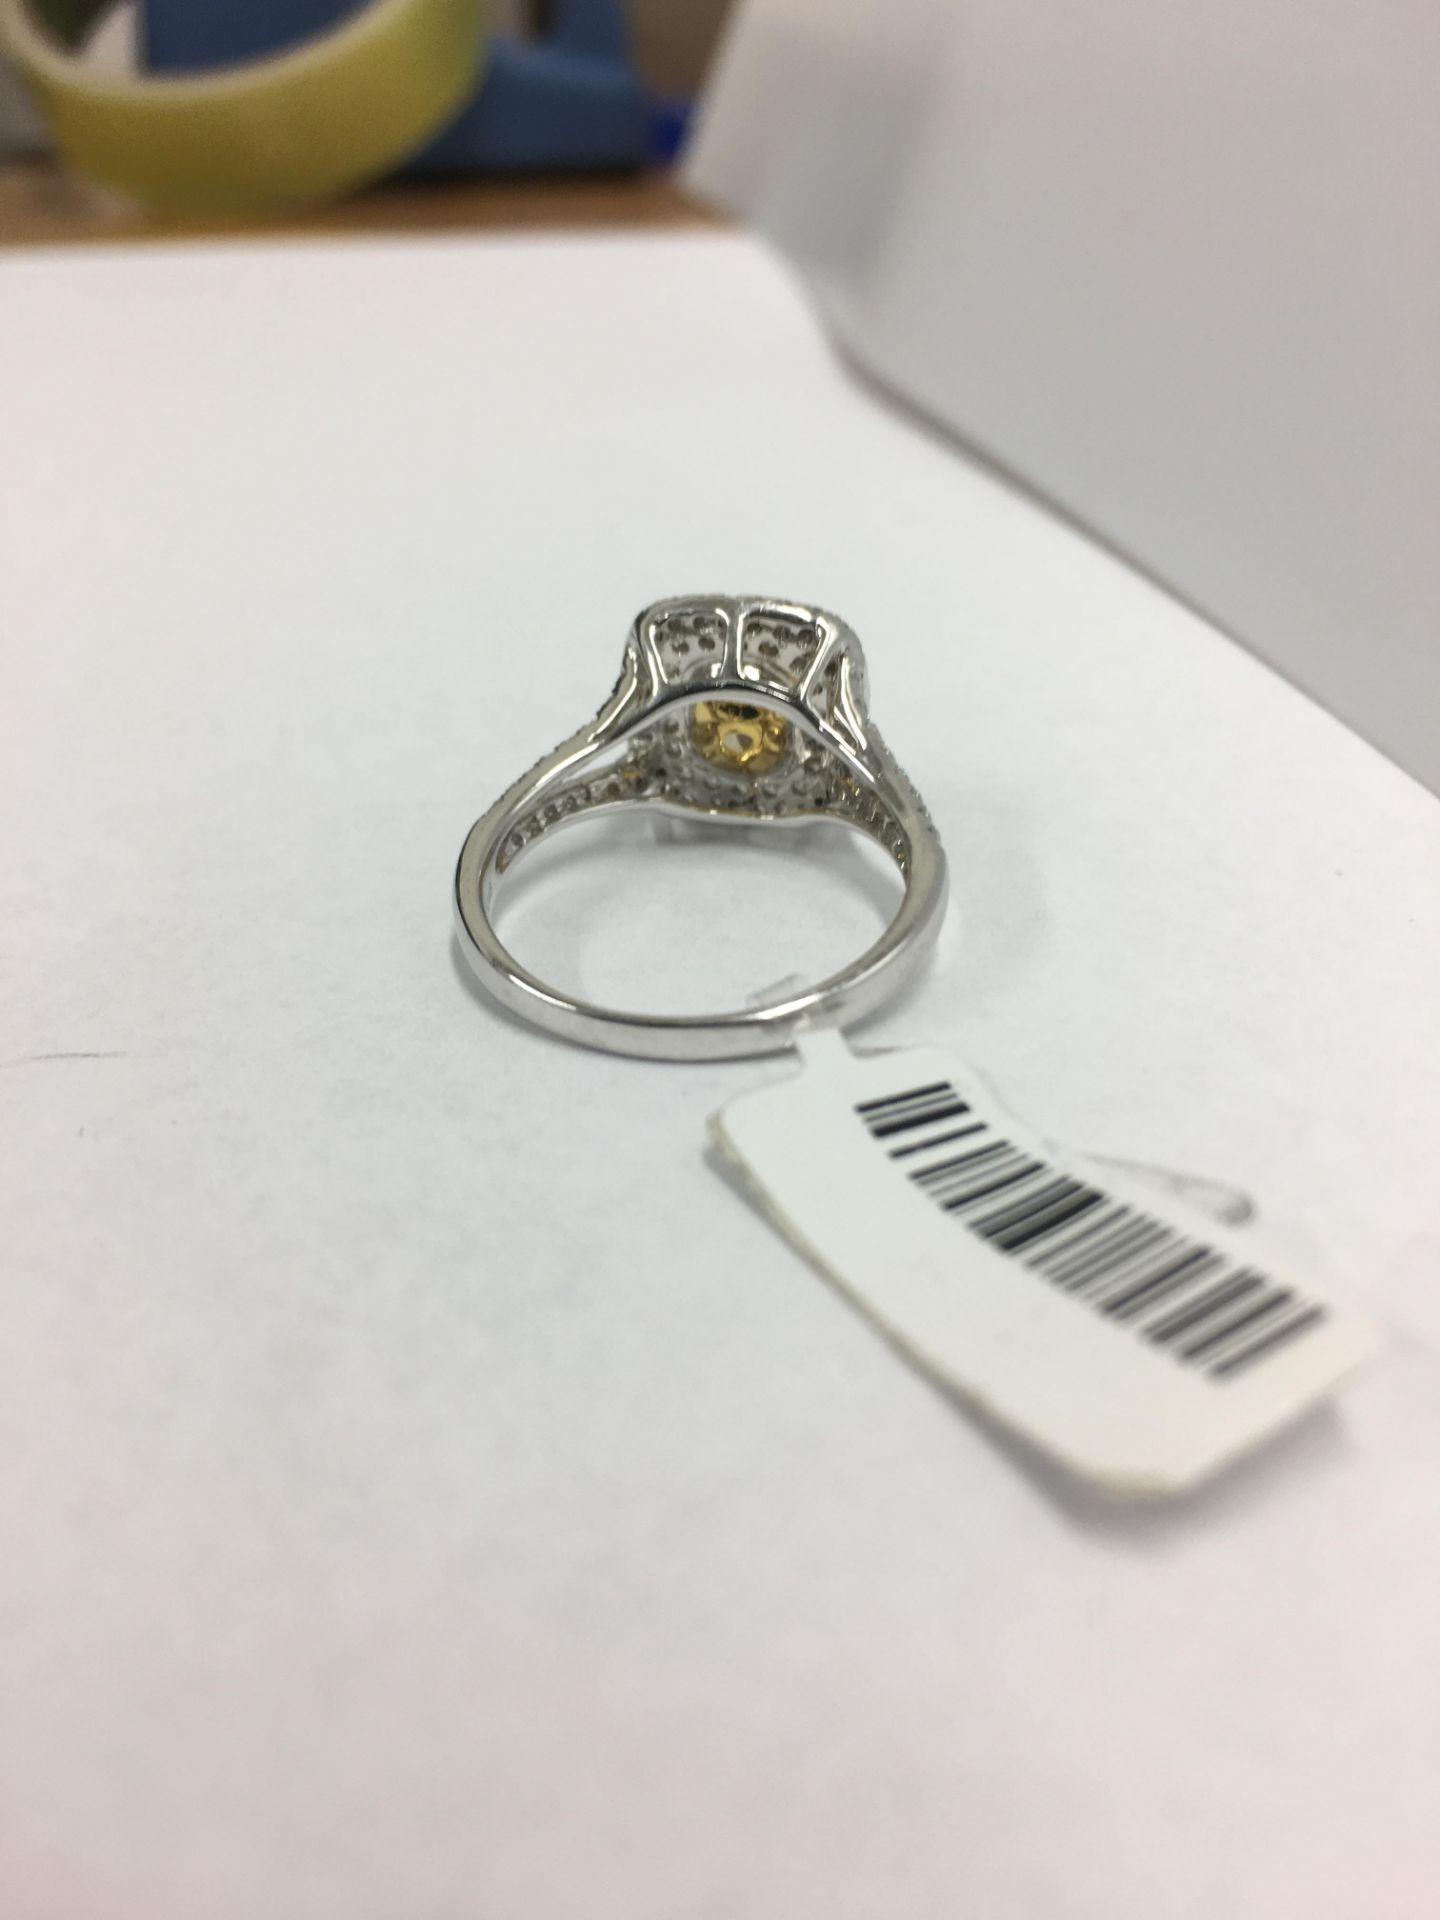 1.11ct Fancy yellow diamond gia certification 3195793106,18ct white gold fancy style setting diamond - Image 4 of 6